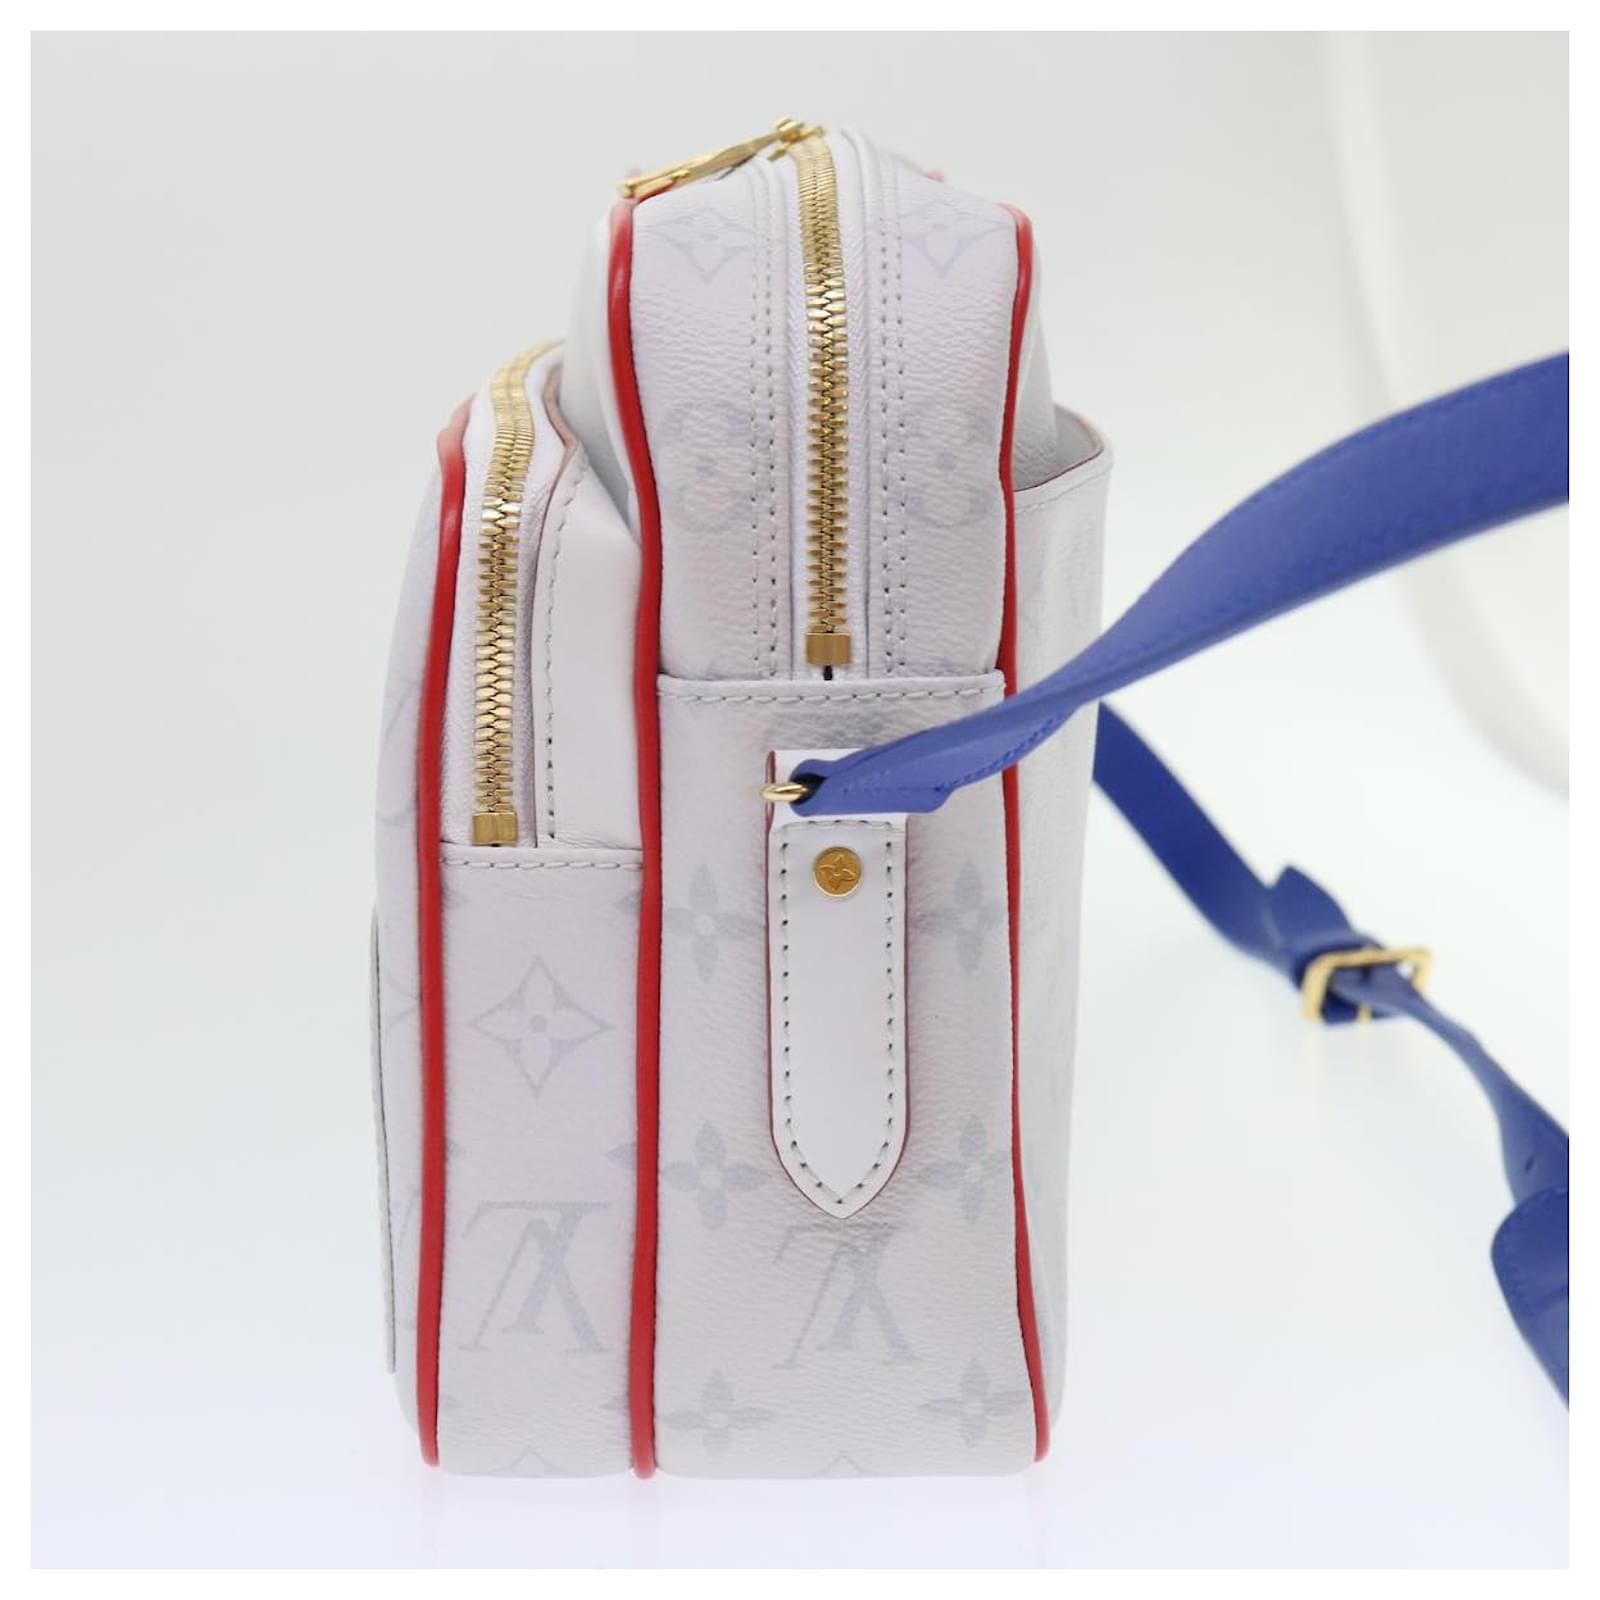 Louis Vuitton LV x NBA White Monogram Antartica Nile Messenger Bag